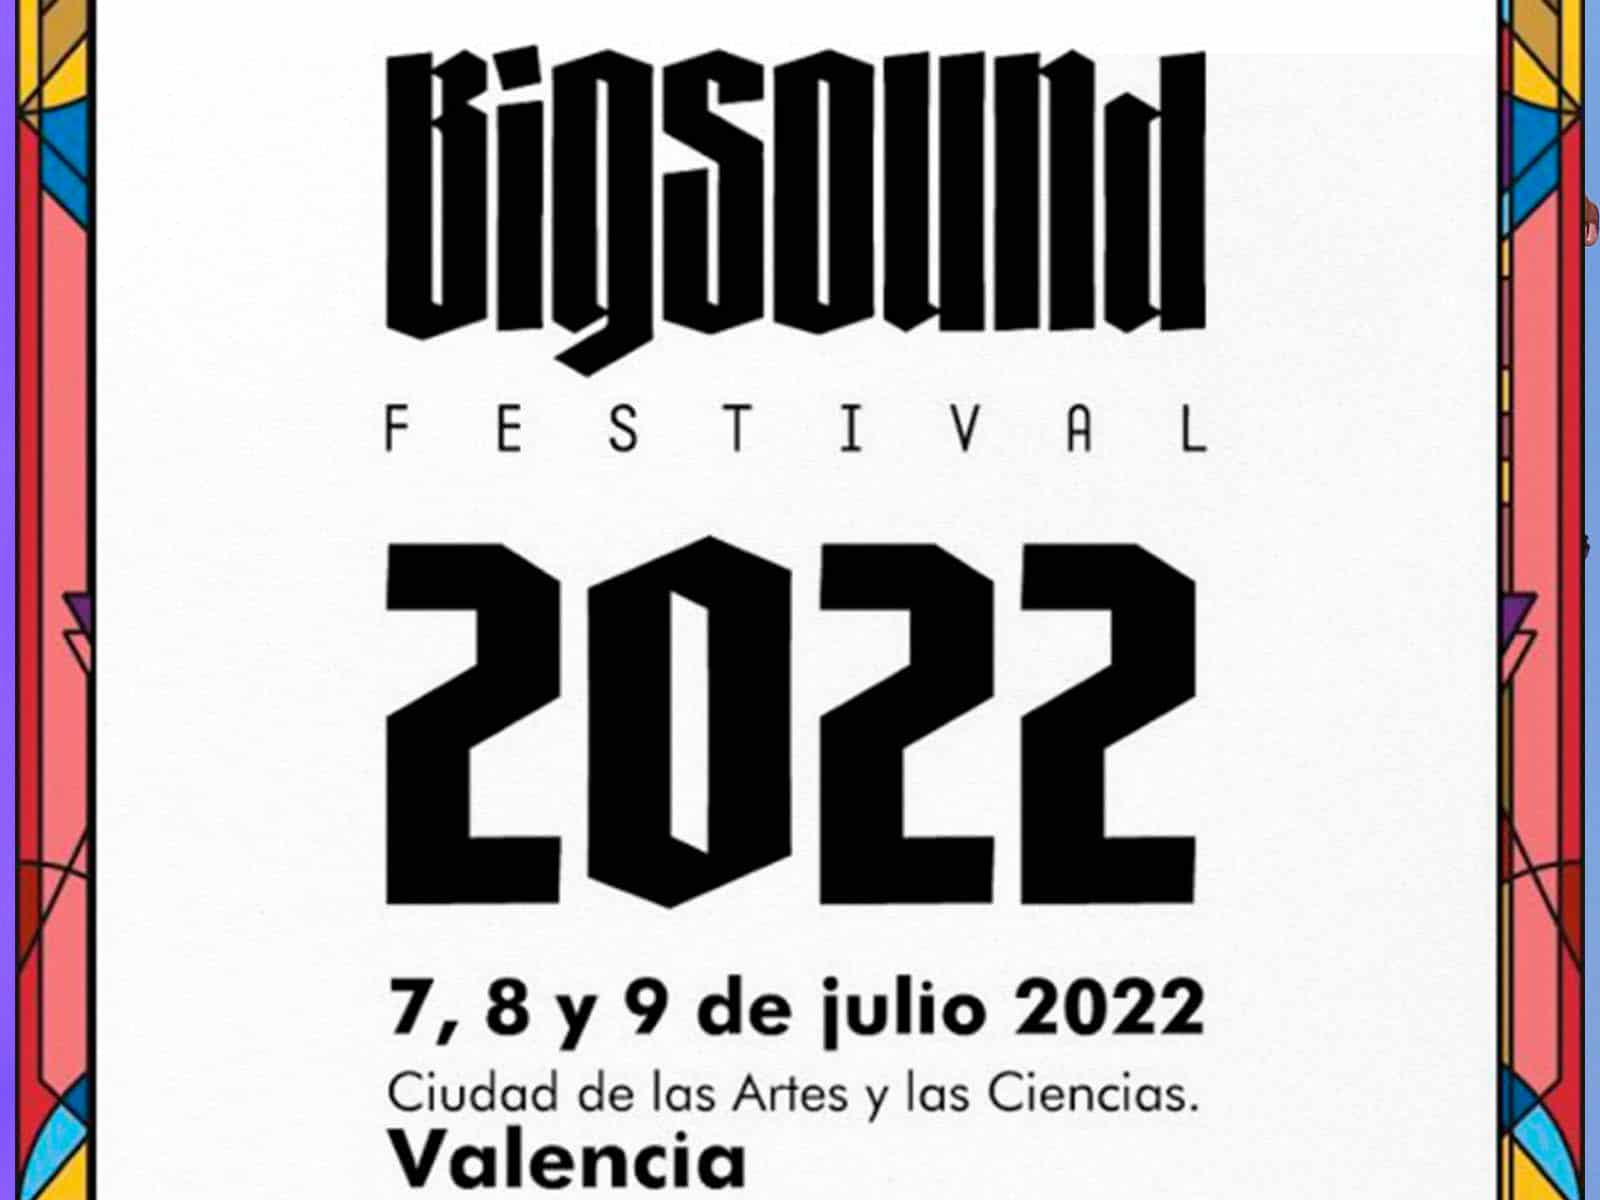 Big Sound Festival 2022: Nicky Jam, Nathy Peluso, C. Tangana y más